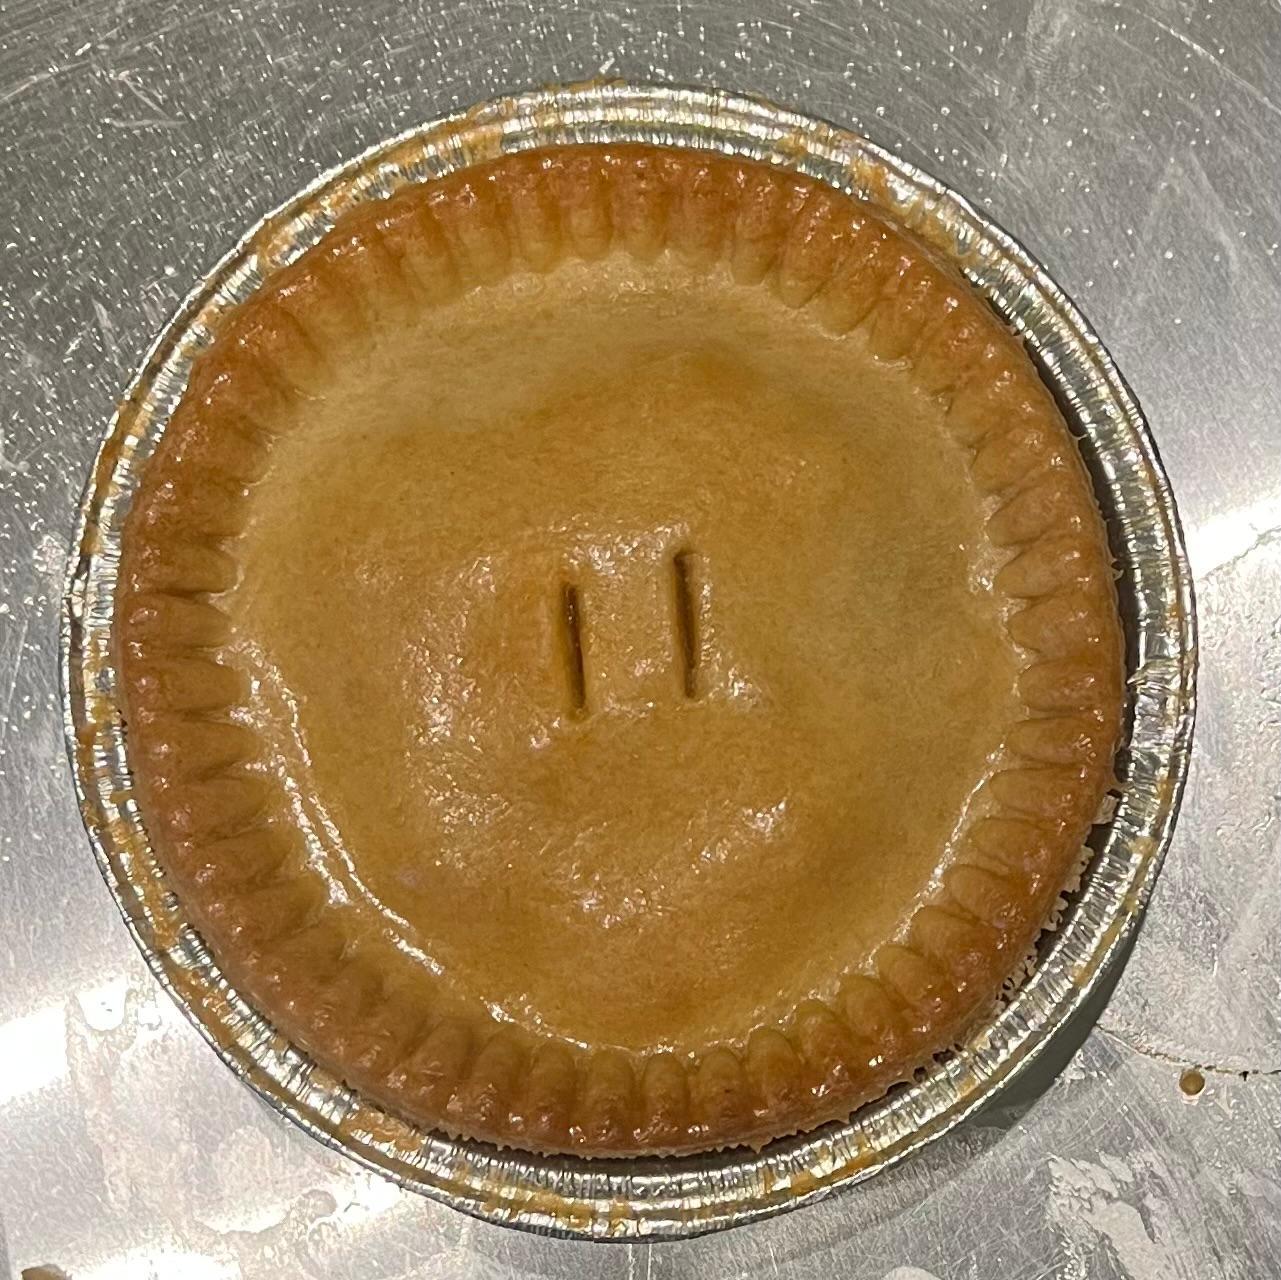 The perfect pie